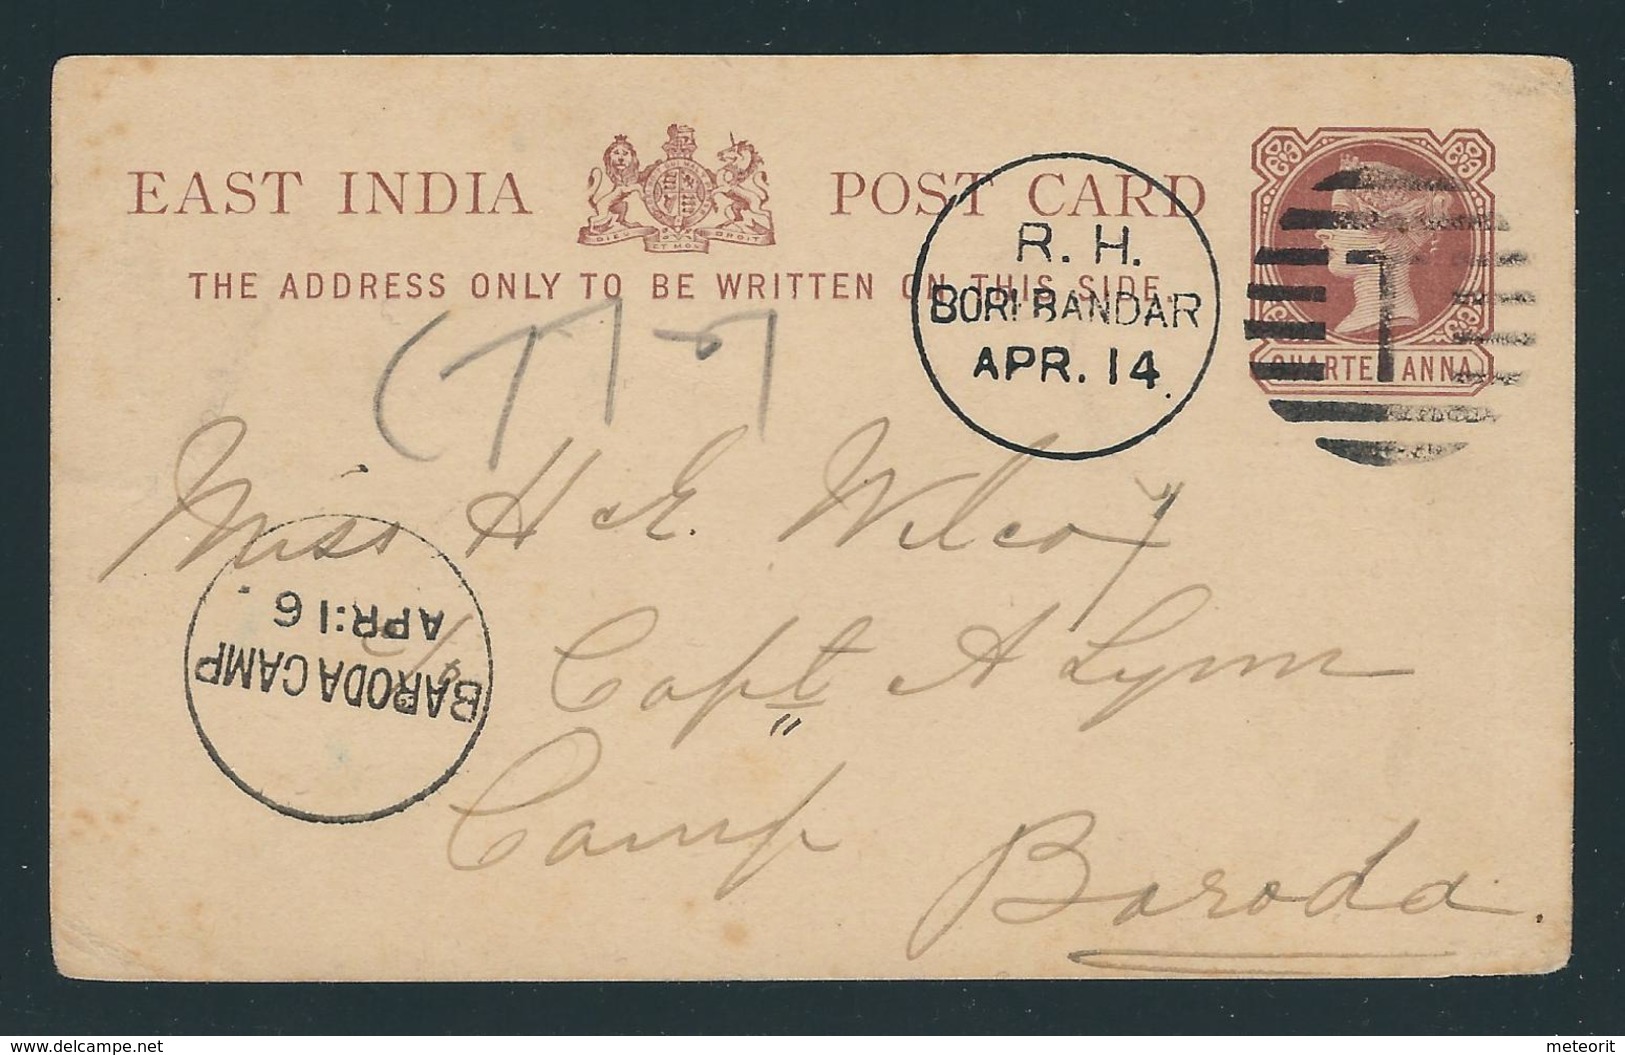 East India 1/4 Anna Stationery Card From R.H. BORI BANDAR APR. 14 To BARODA CAMP APR:16 - Ohne Zuordnung